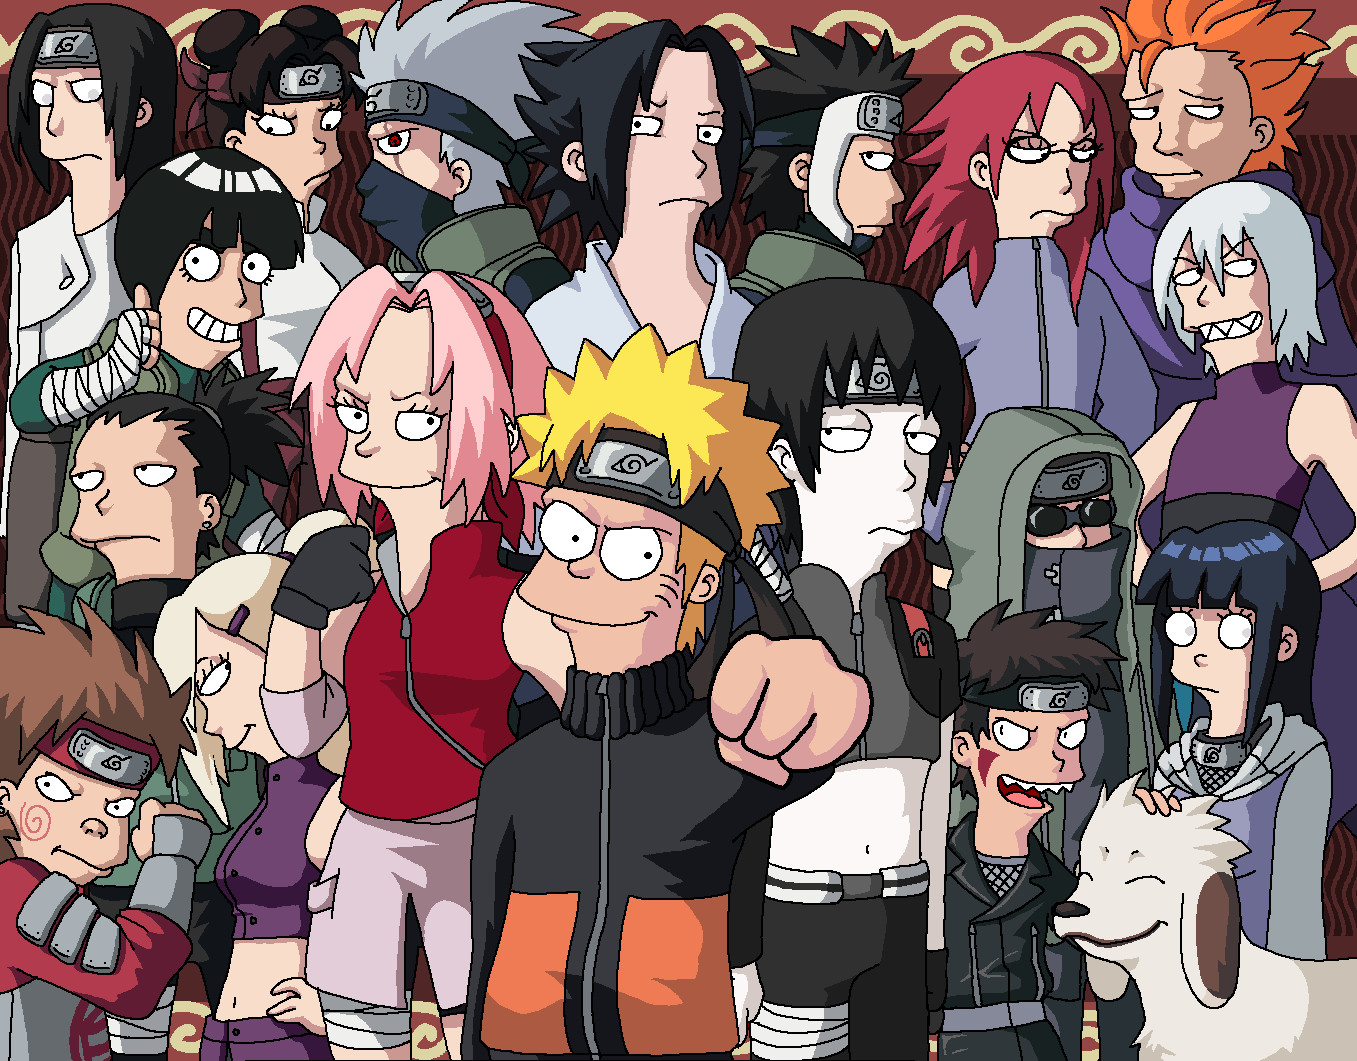 HWFD - Anime Naruto Girl Characters wallpaper 1080p (1357 x 1061 ) | HD